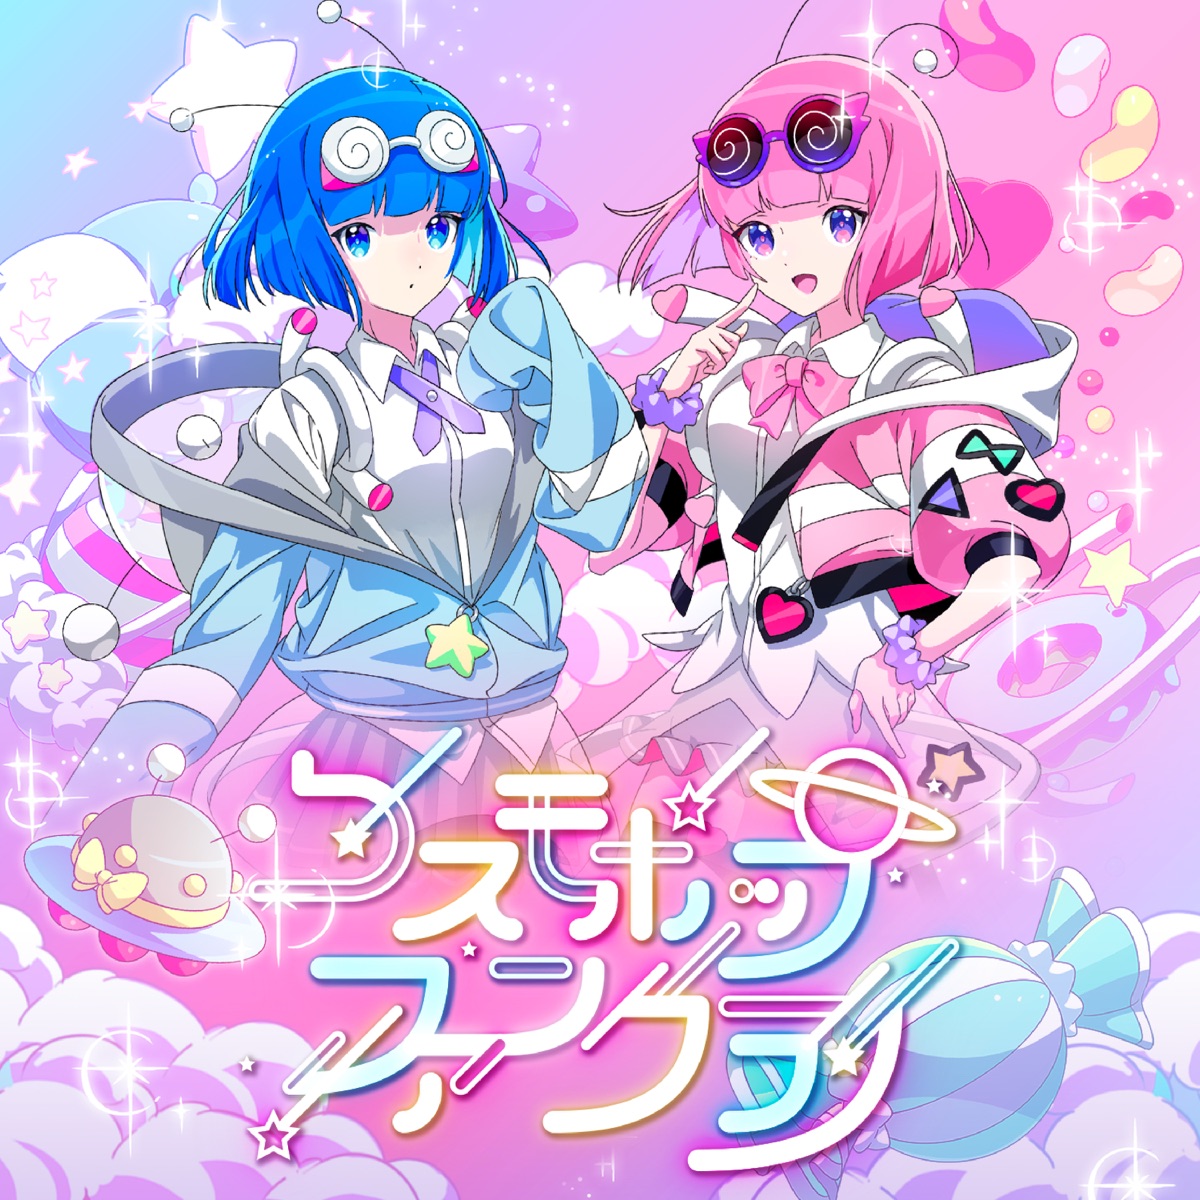 Cover for『NayutalieN - Cosmo Pop Funclub (feat. 000, Nanawo Akari)』from the release『Cosmo Pop Funclub (feat. 000, Nanawo Akari)』